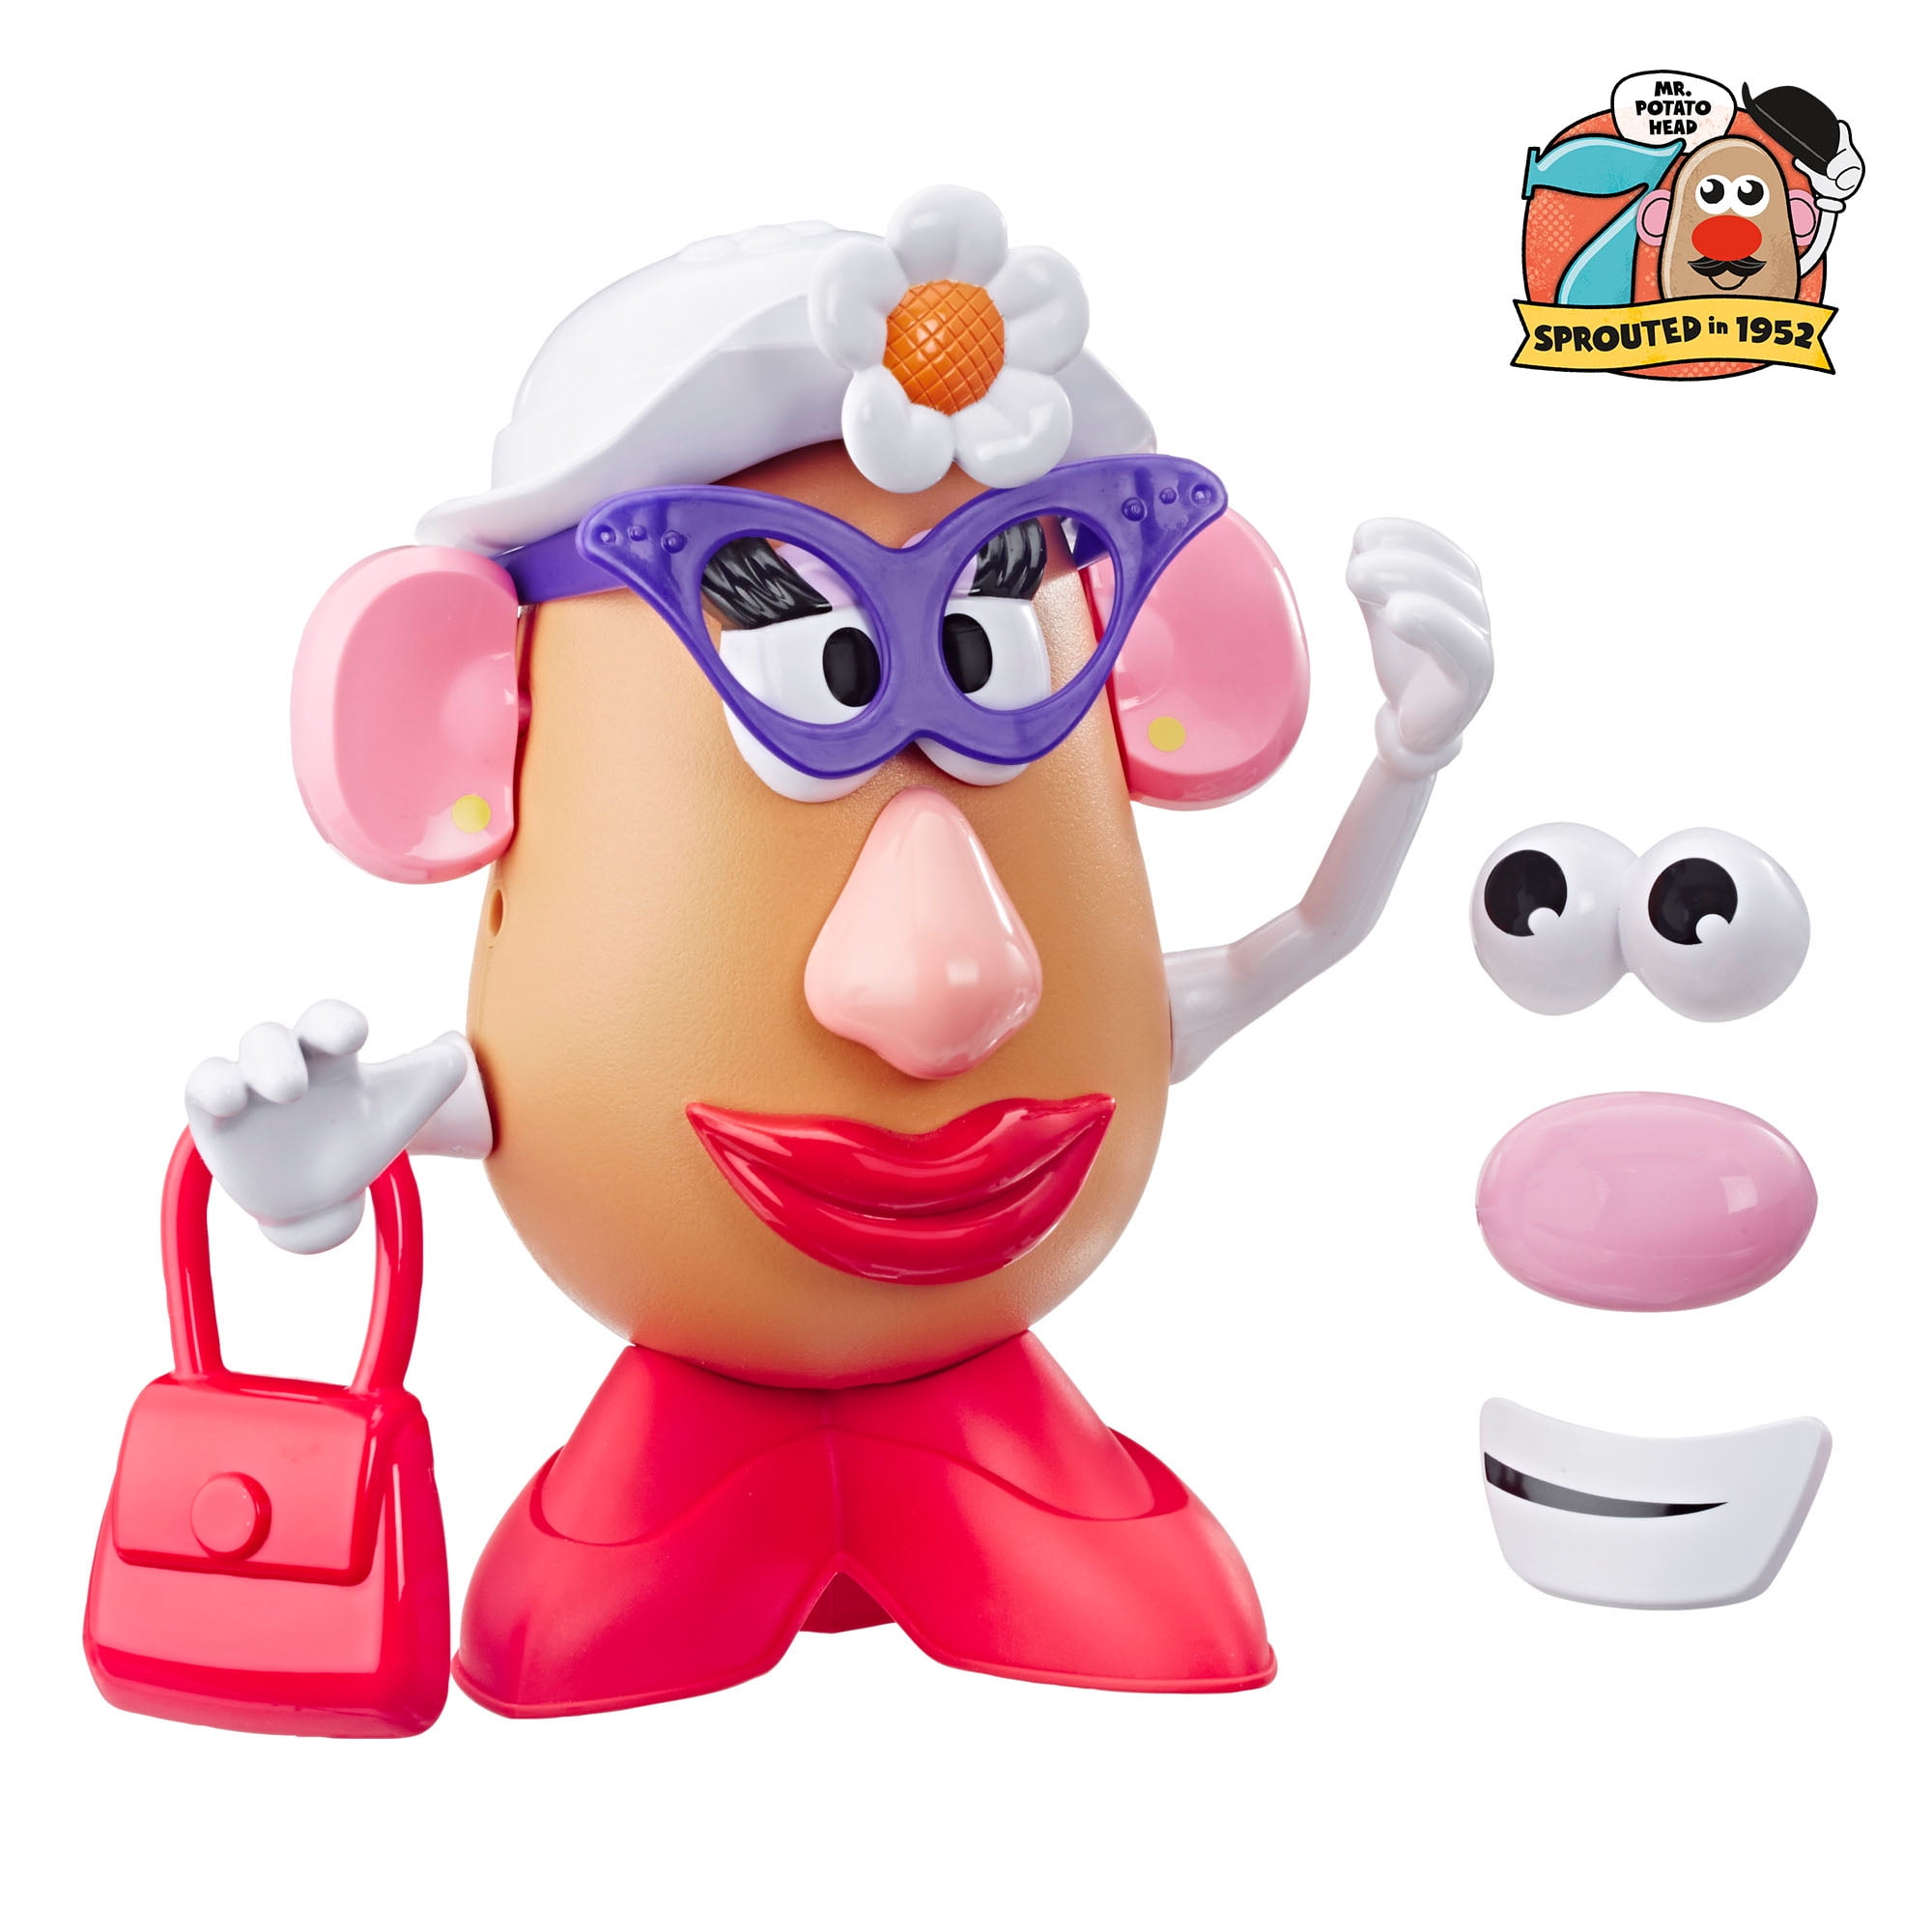 Classic Mr Potato Head Playskool Friends MINT in Package! 